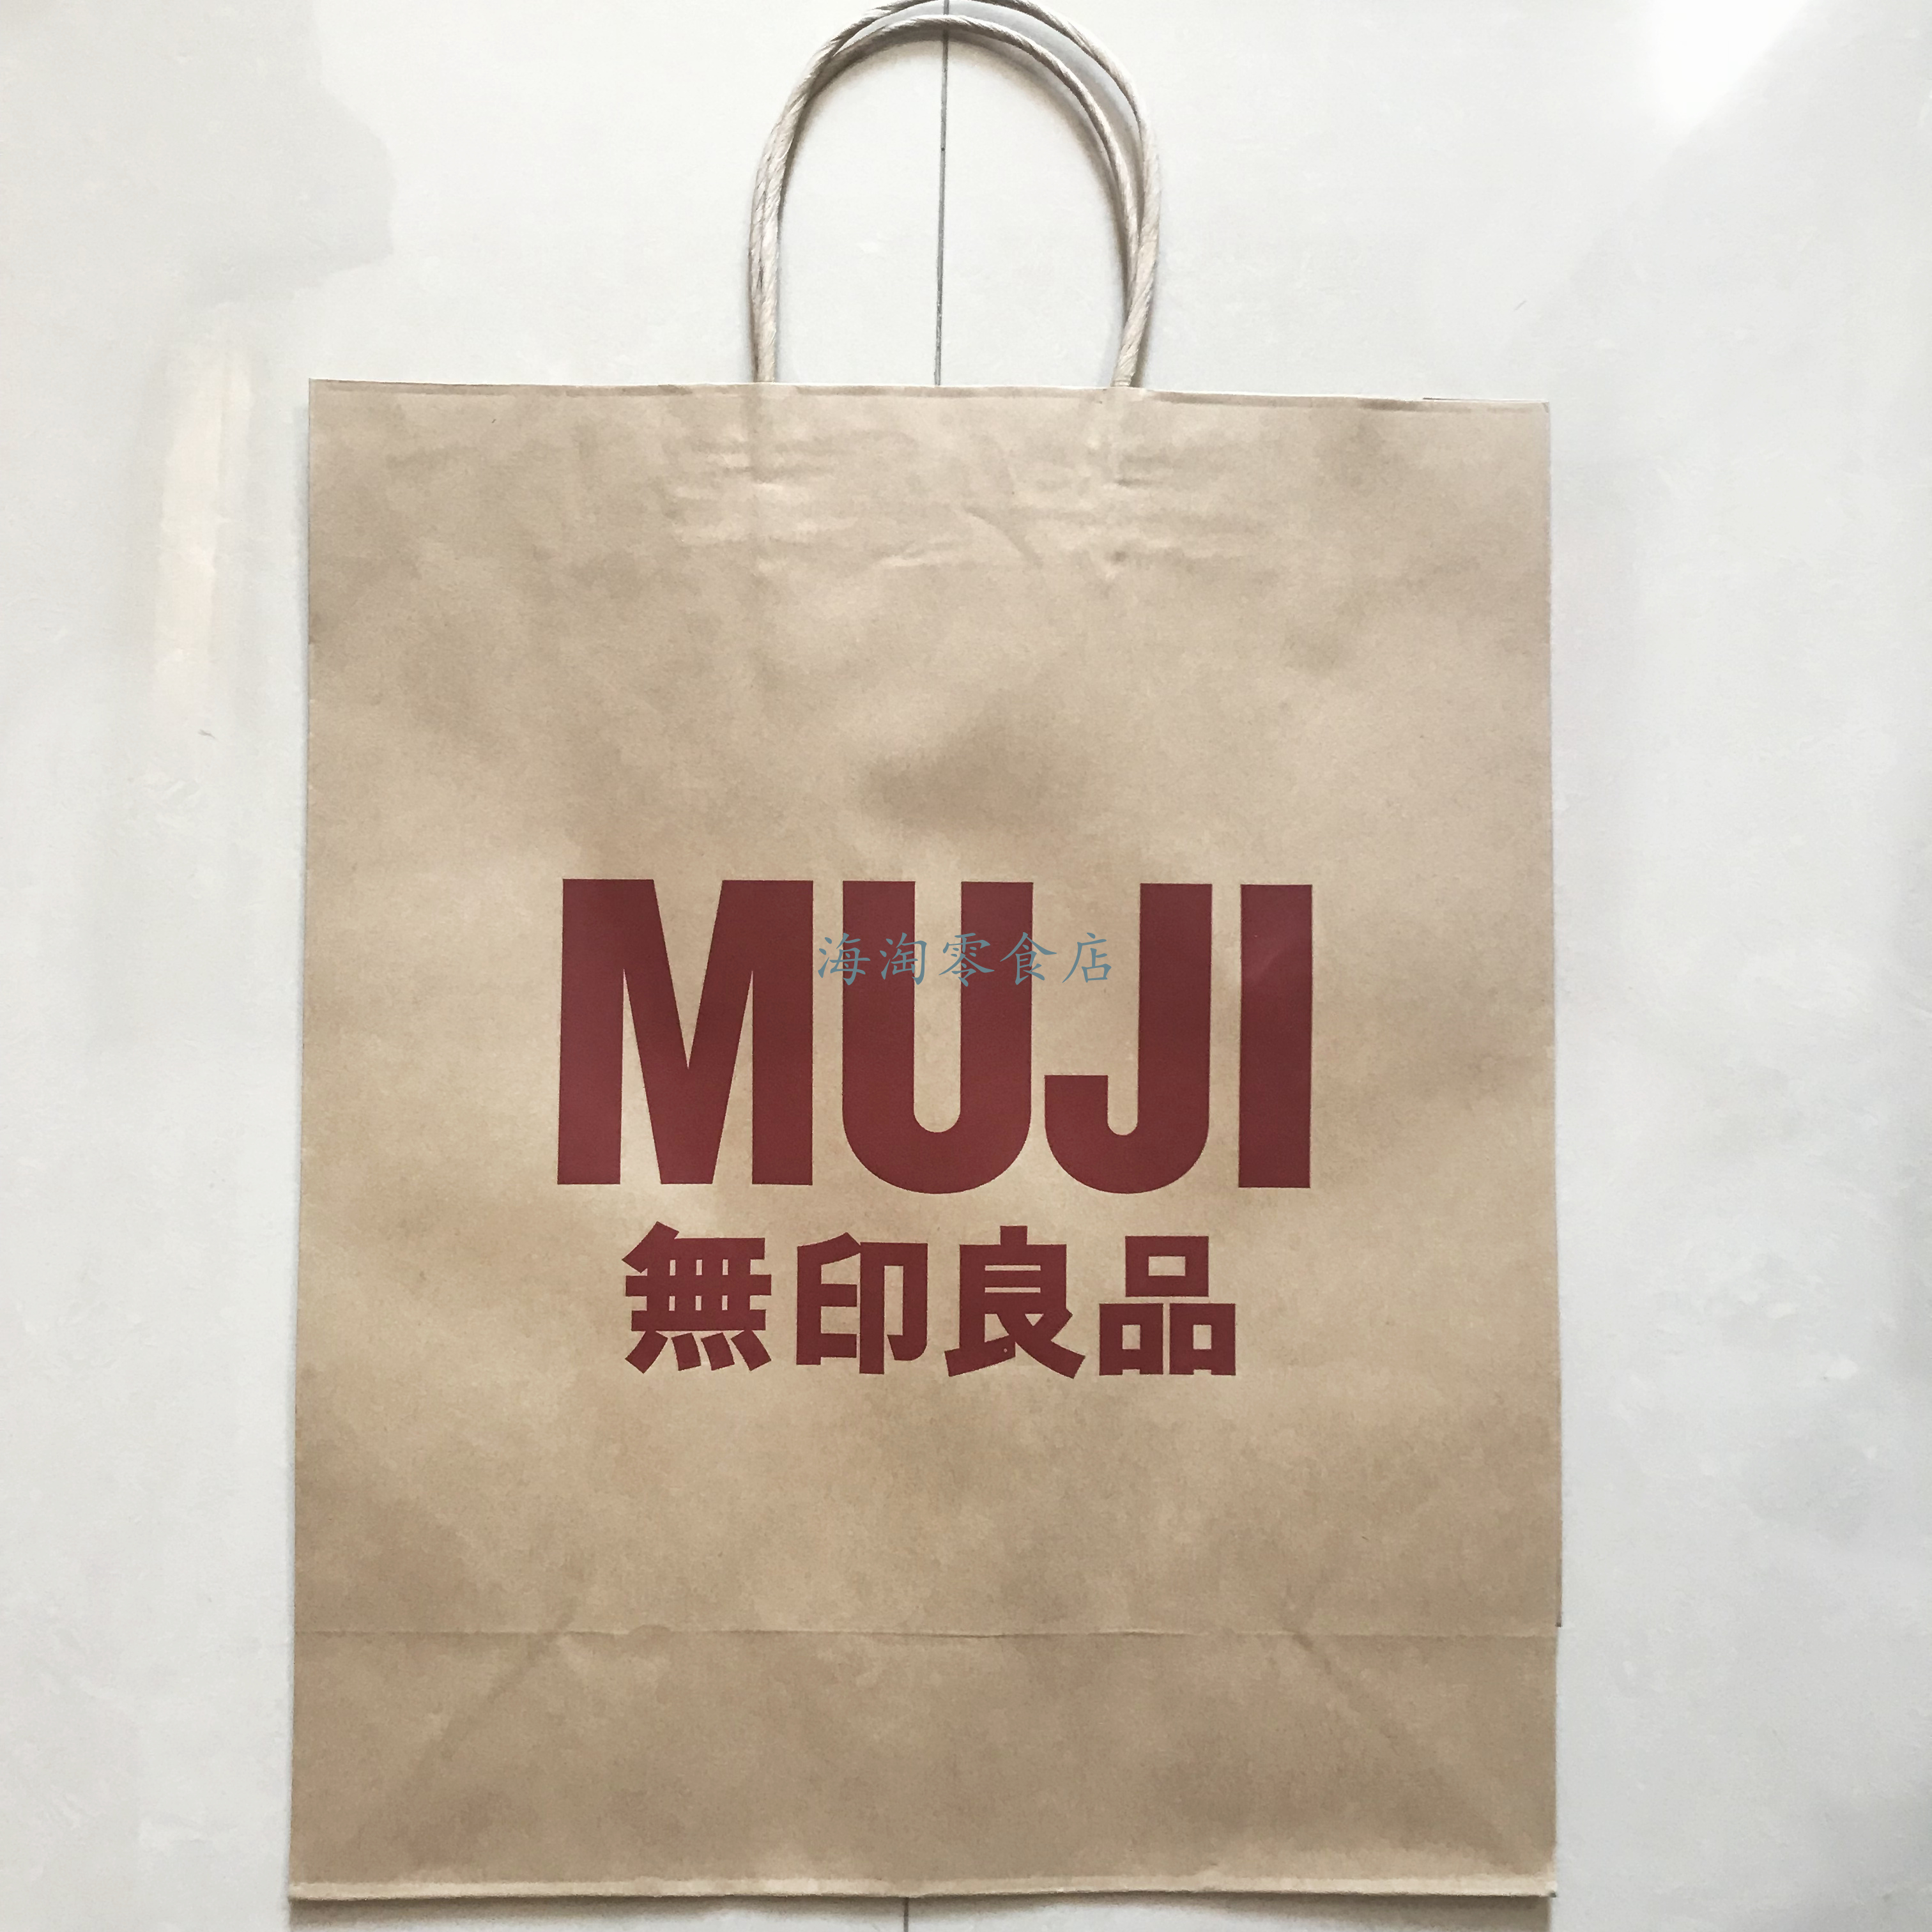 muji袋子无印良品手提袋礼品袋牛皮纸袋手提袋包装袋购物袋纸袋